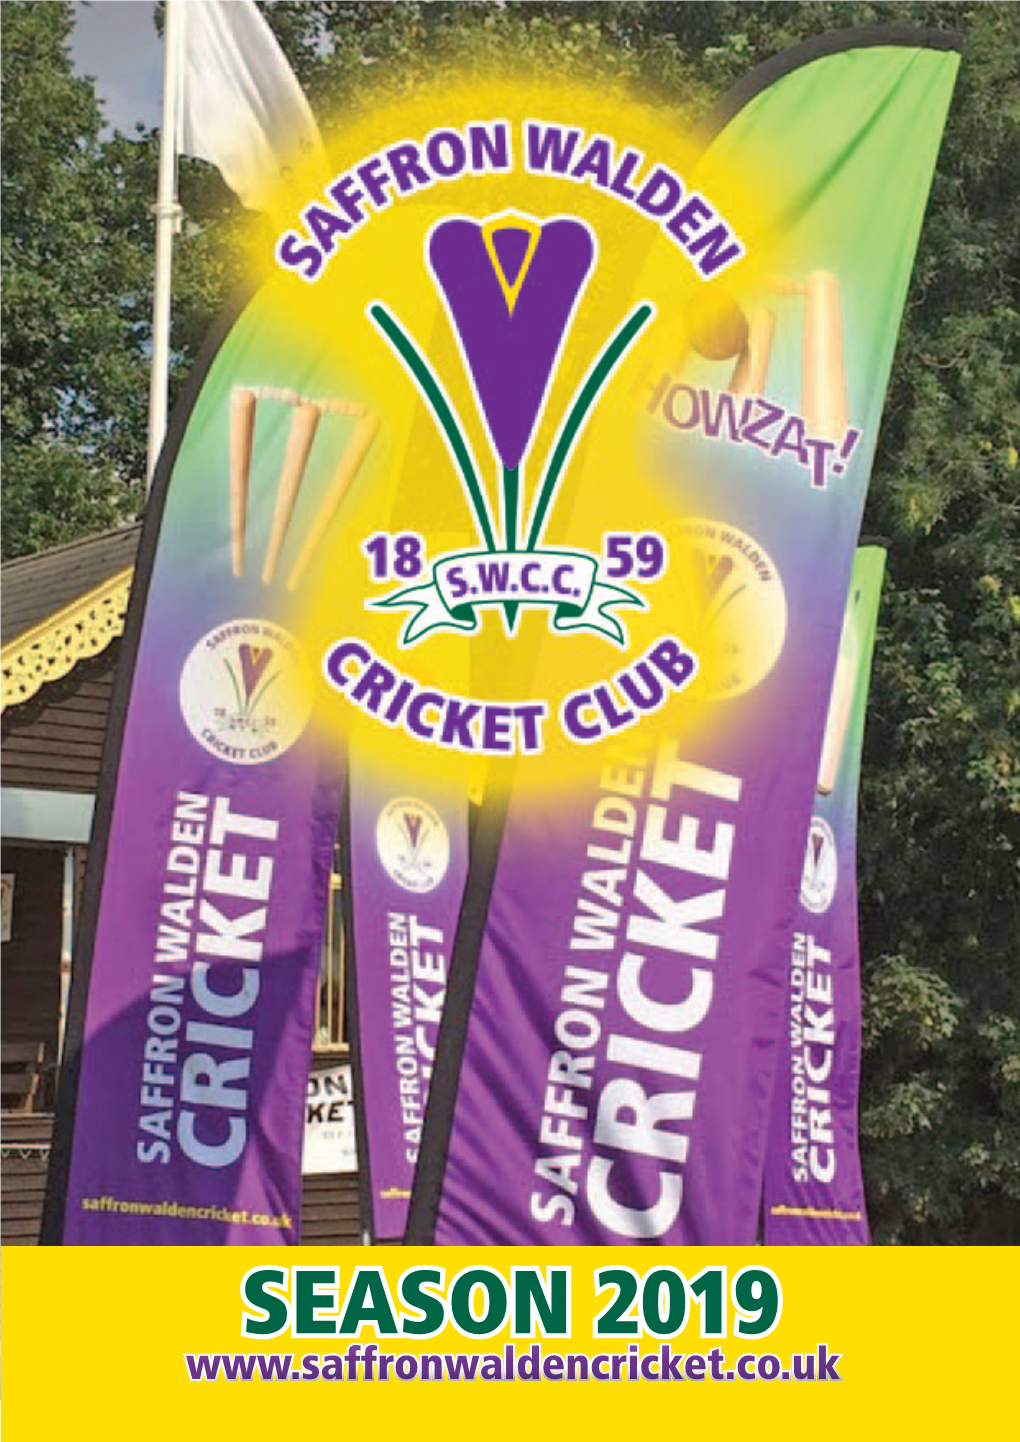 SEASON 2019 Directions to Saffron Walden Cricket Club